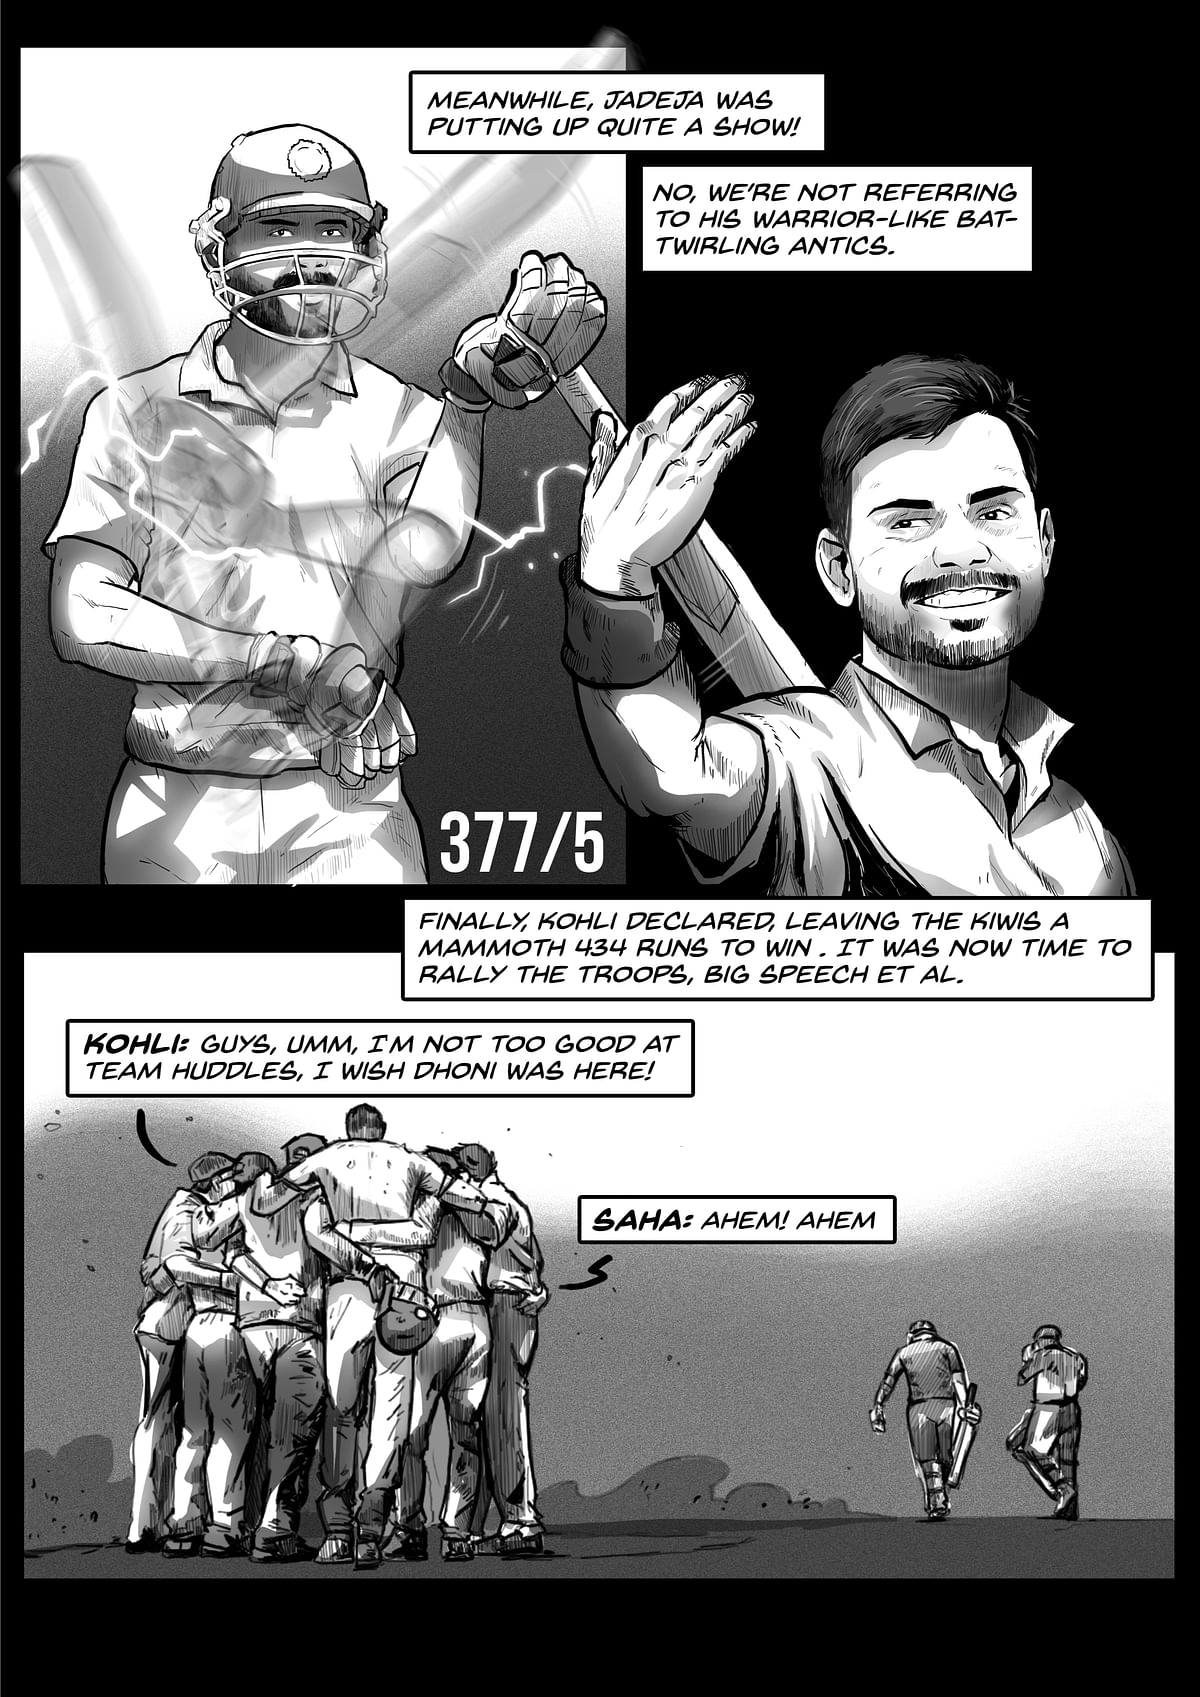 What went through captain Kohli’s mind?